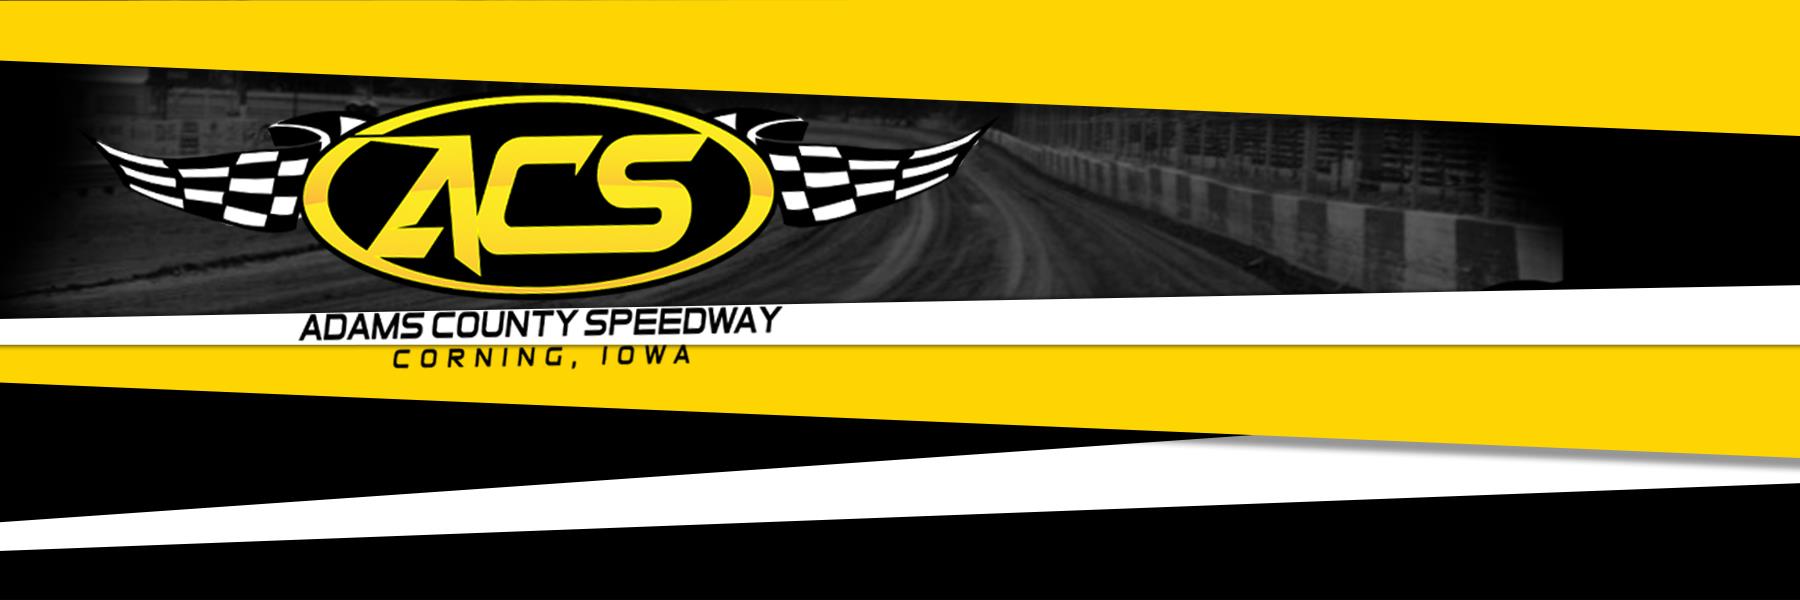 7/24/2021 - Adams County Speedway